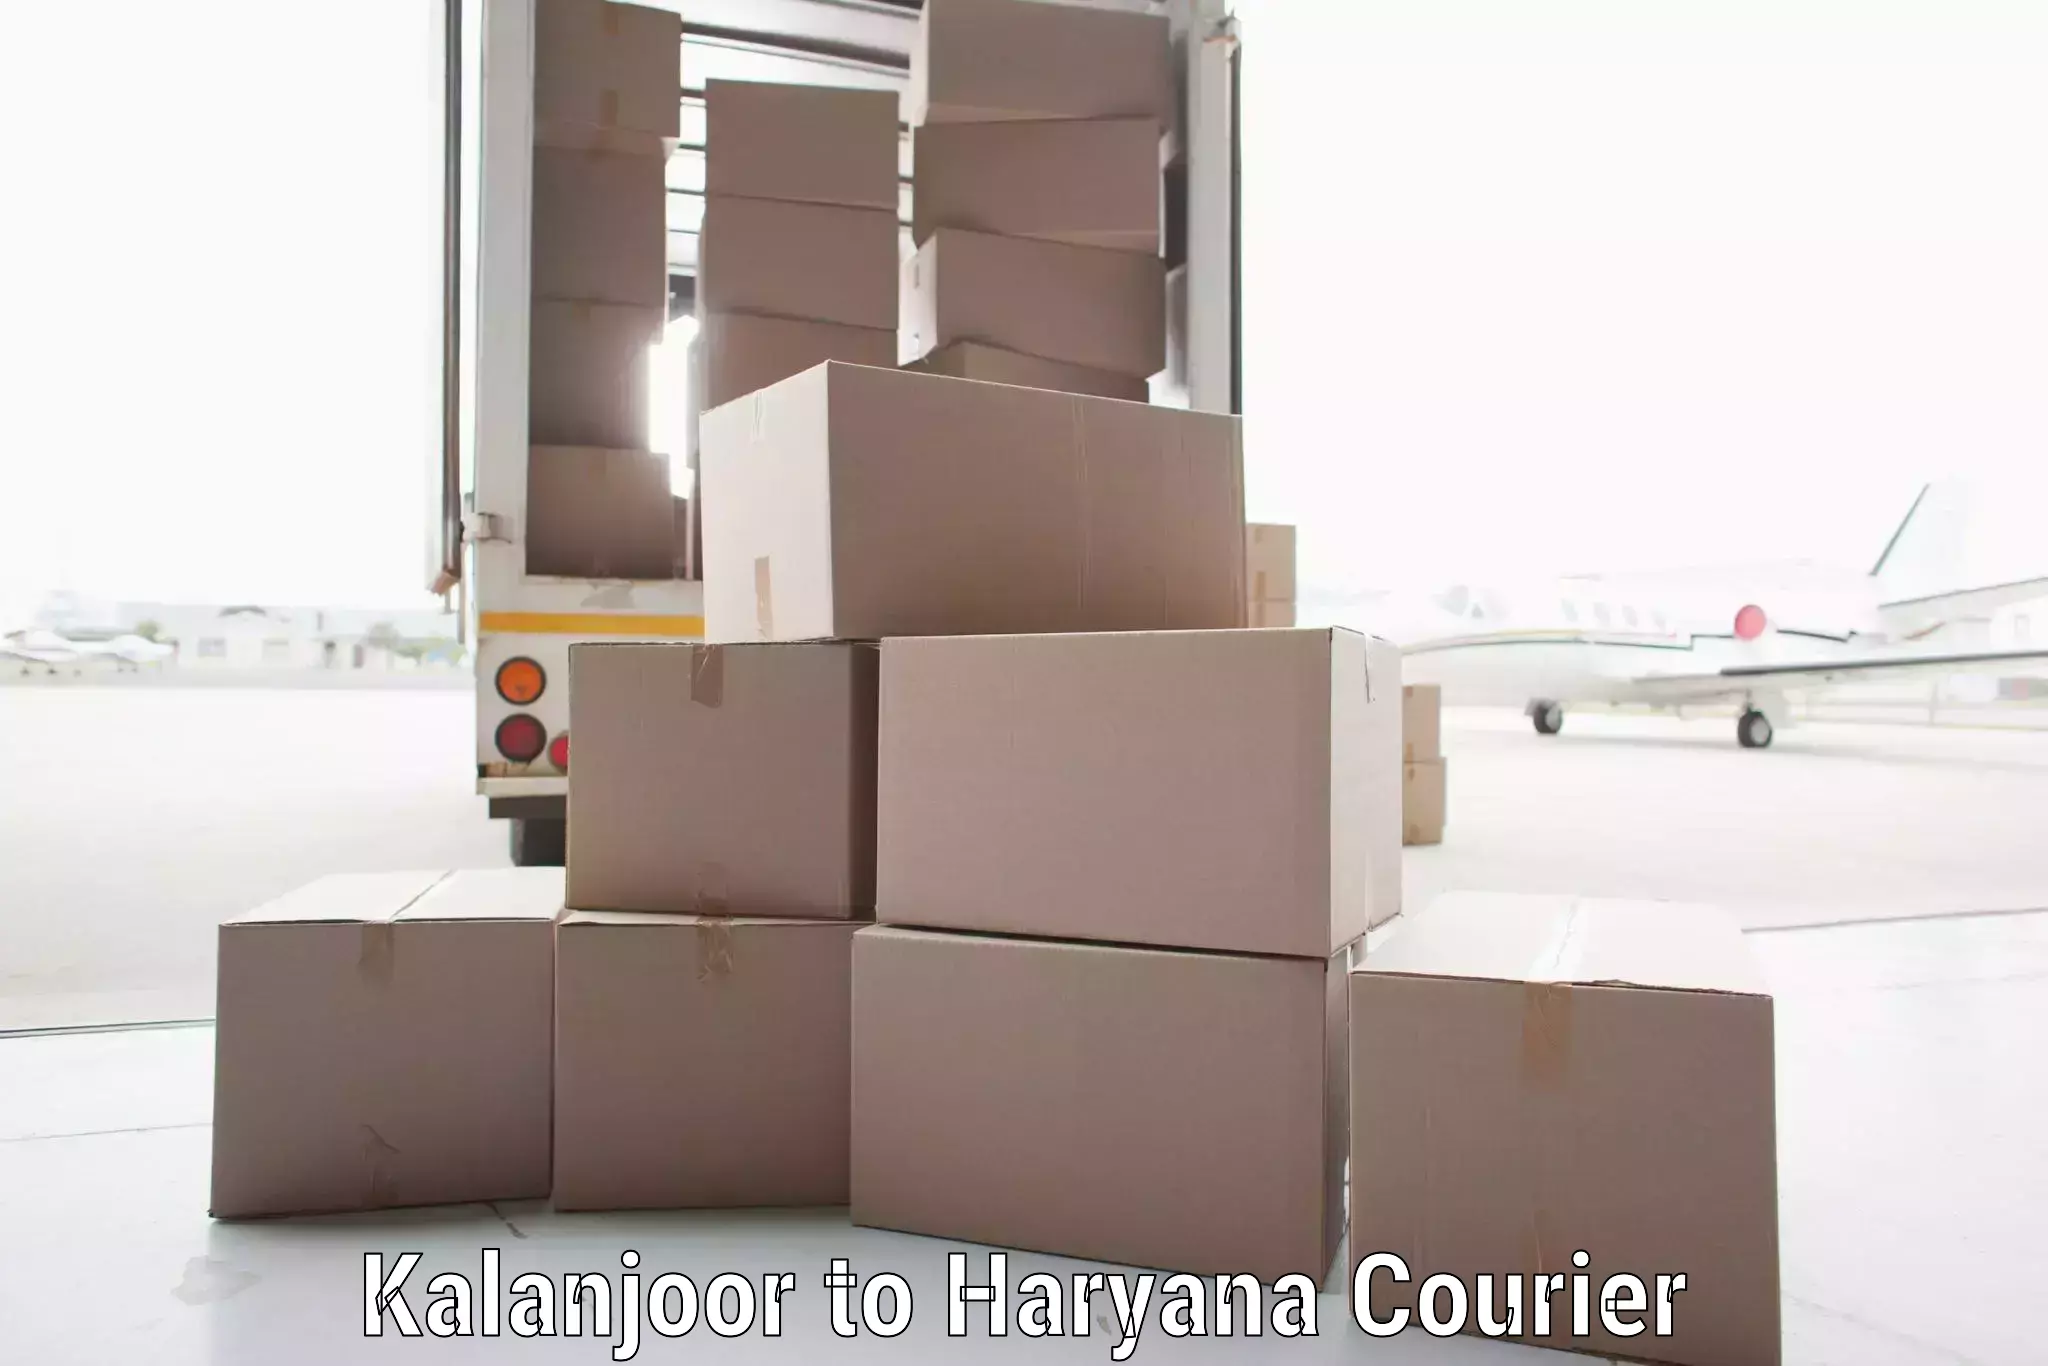 Supply chain efficiency Kalanjoor to Haryana